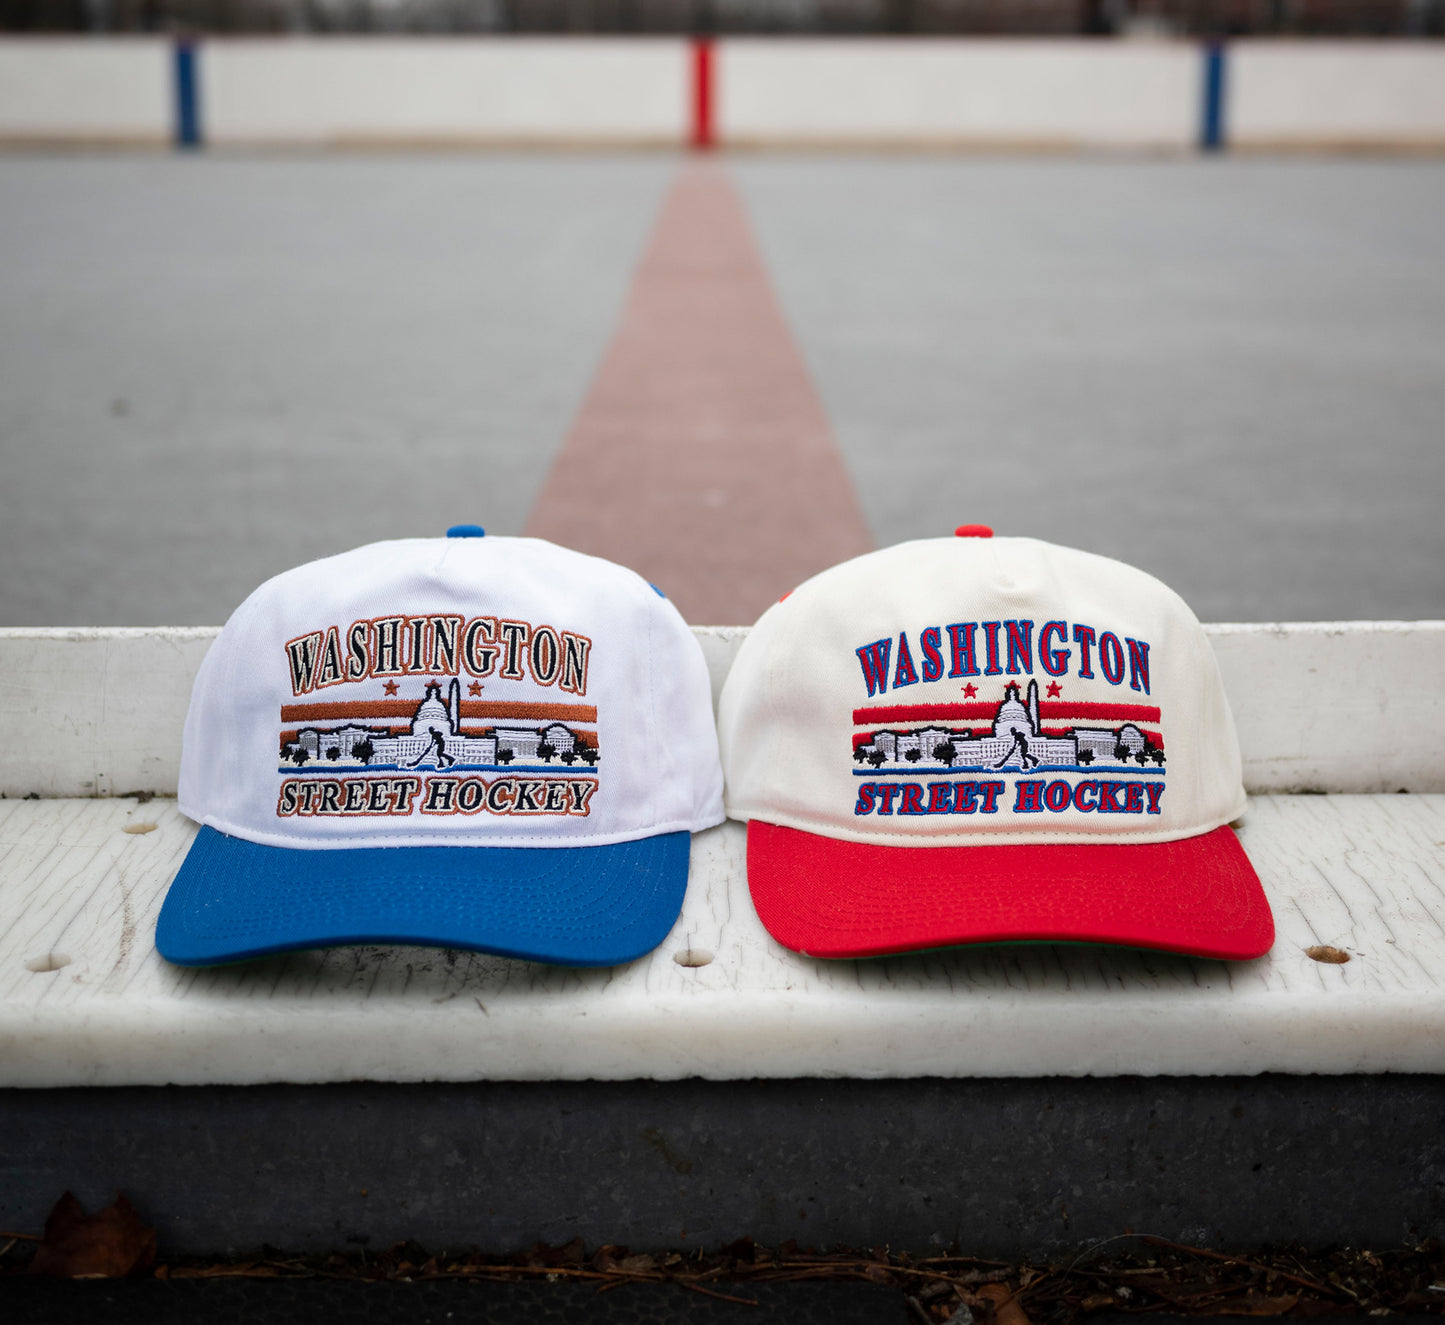 Washington Street Hockey Snapback: White